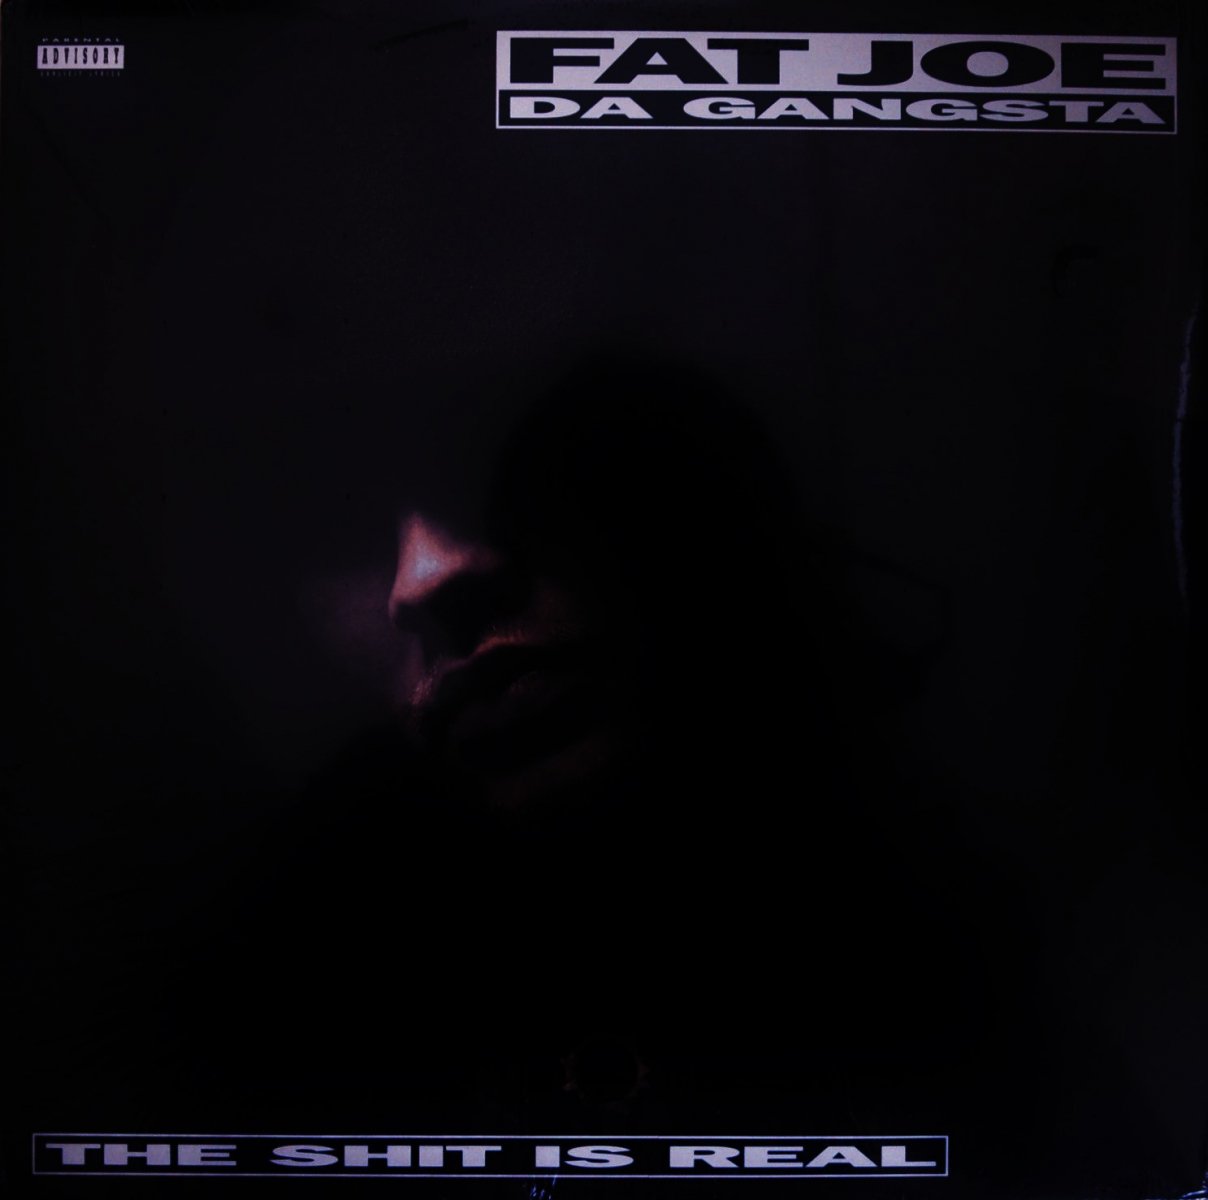 FAT JOE / THE SHITS REAL (DJ PREMIER REMIX) (12